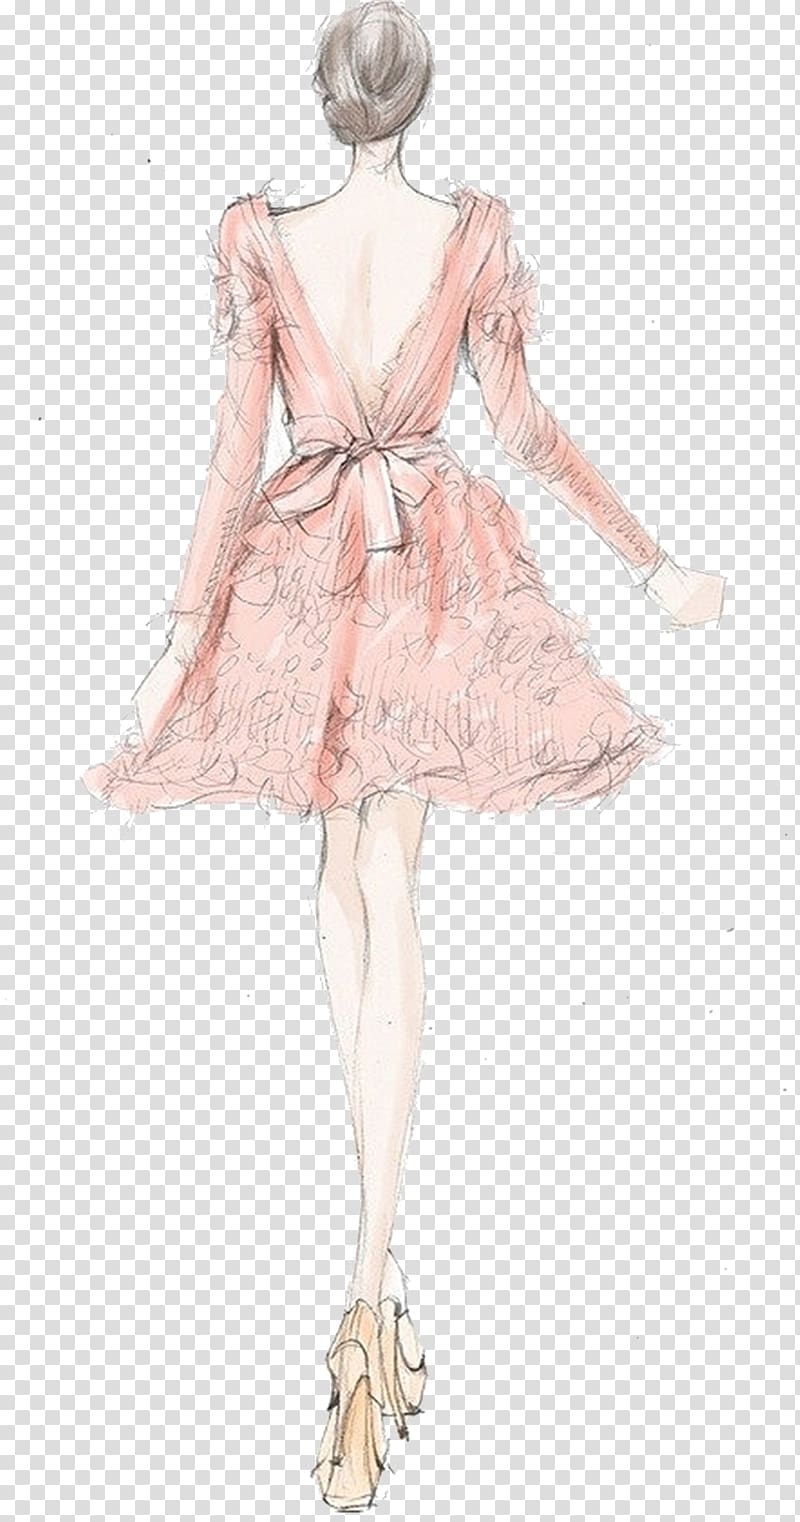 Woman In Pink Dress Illustration Drawing Fashion Illustration